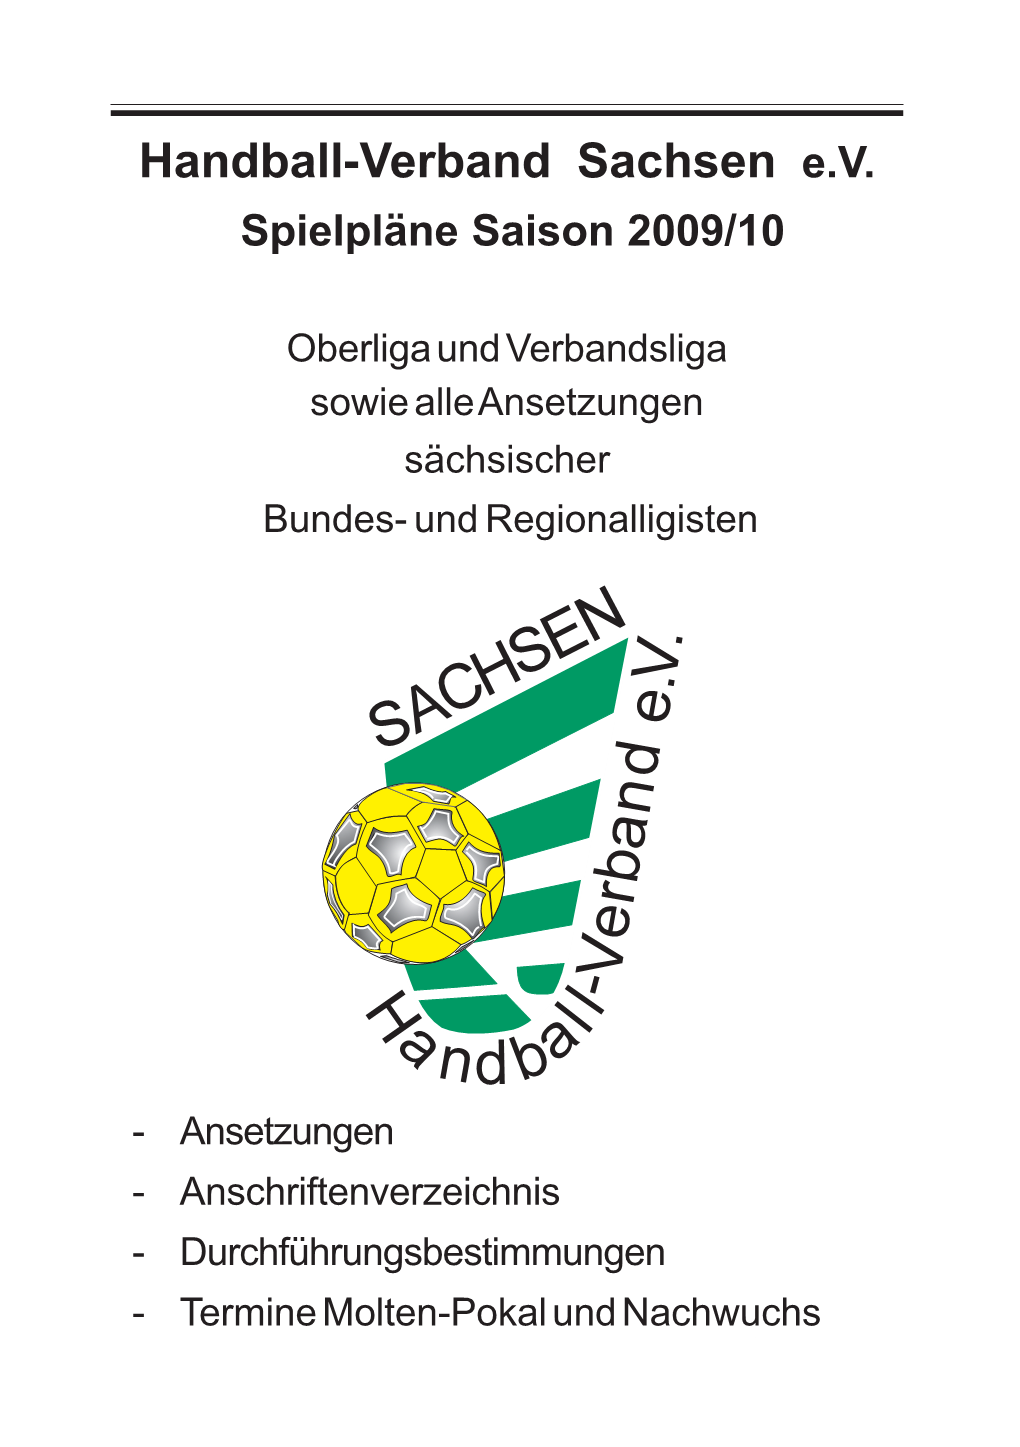 Handball-Verband Sachsen E.V. Spielpläne Saison 2009/10